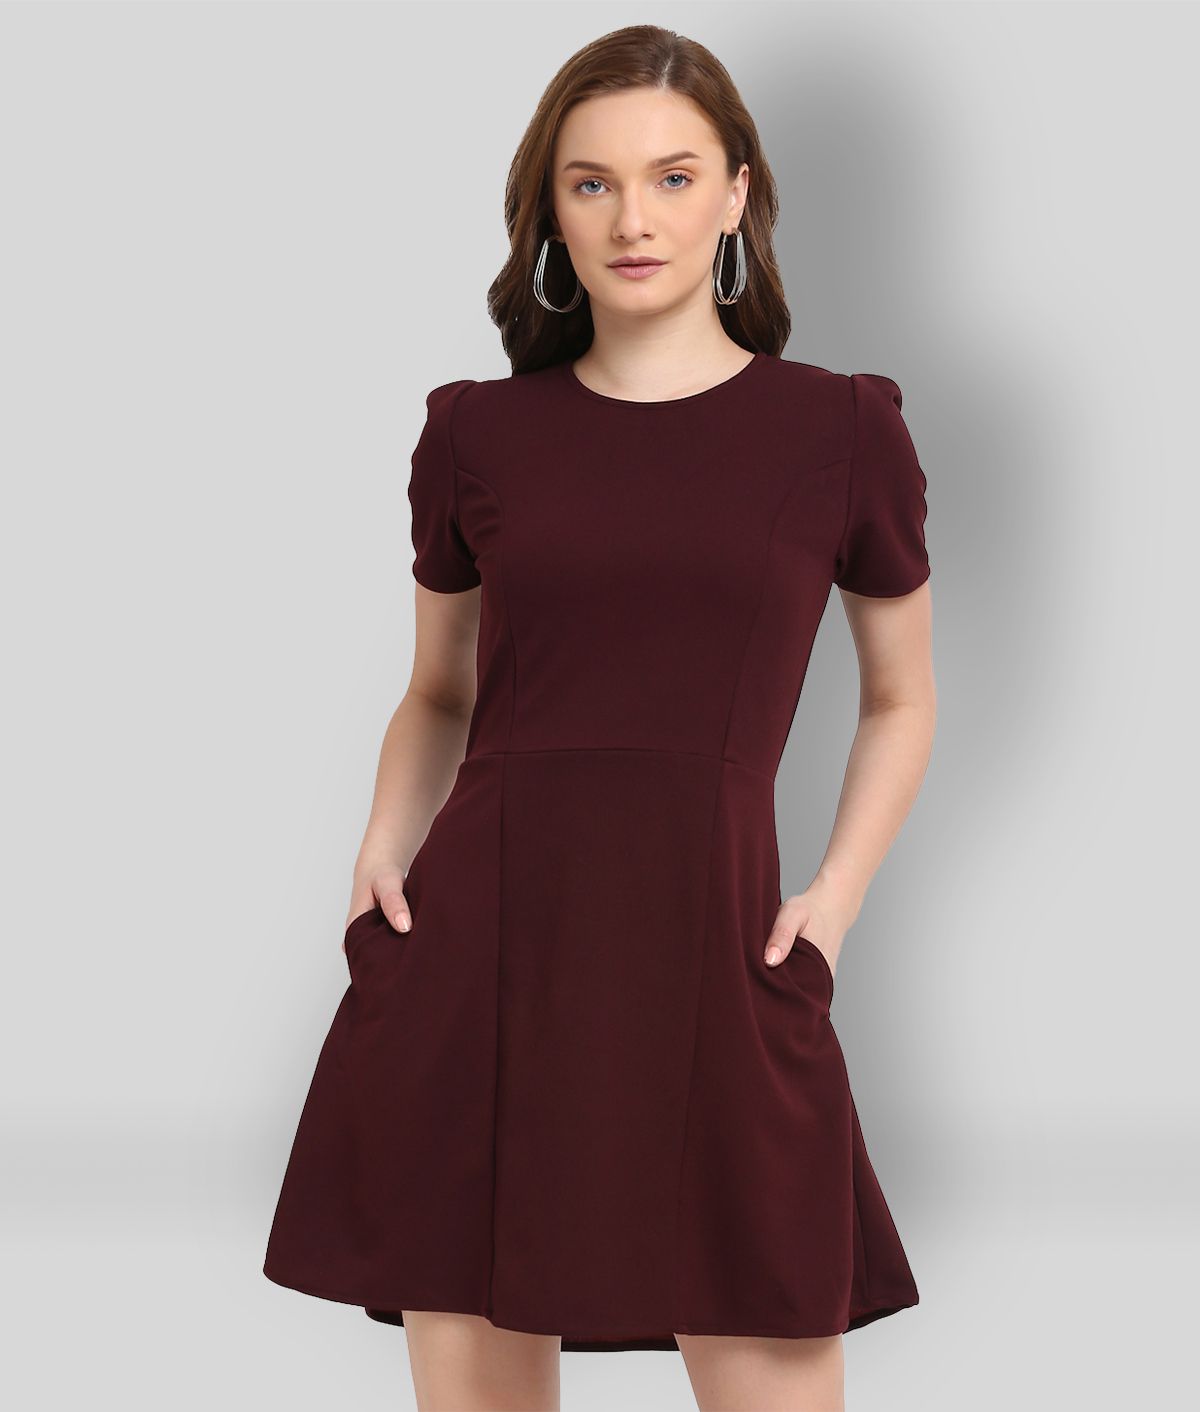 La Zoire - Maroon Polyester Women's Fit & Flare Dress ( Pack of 1 )